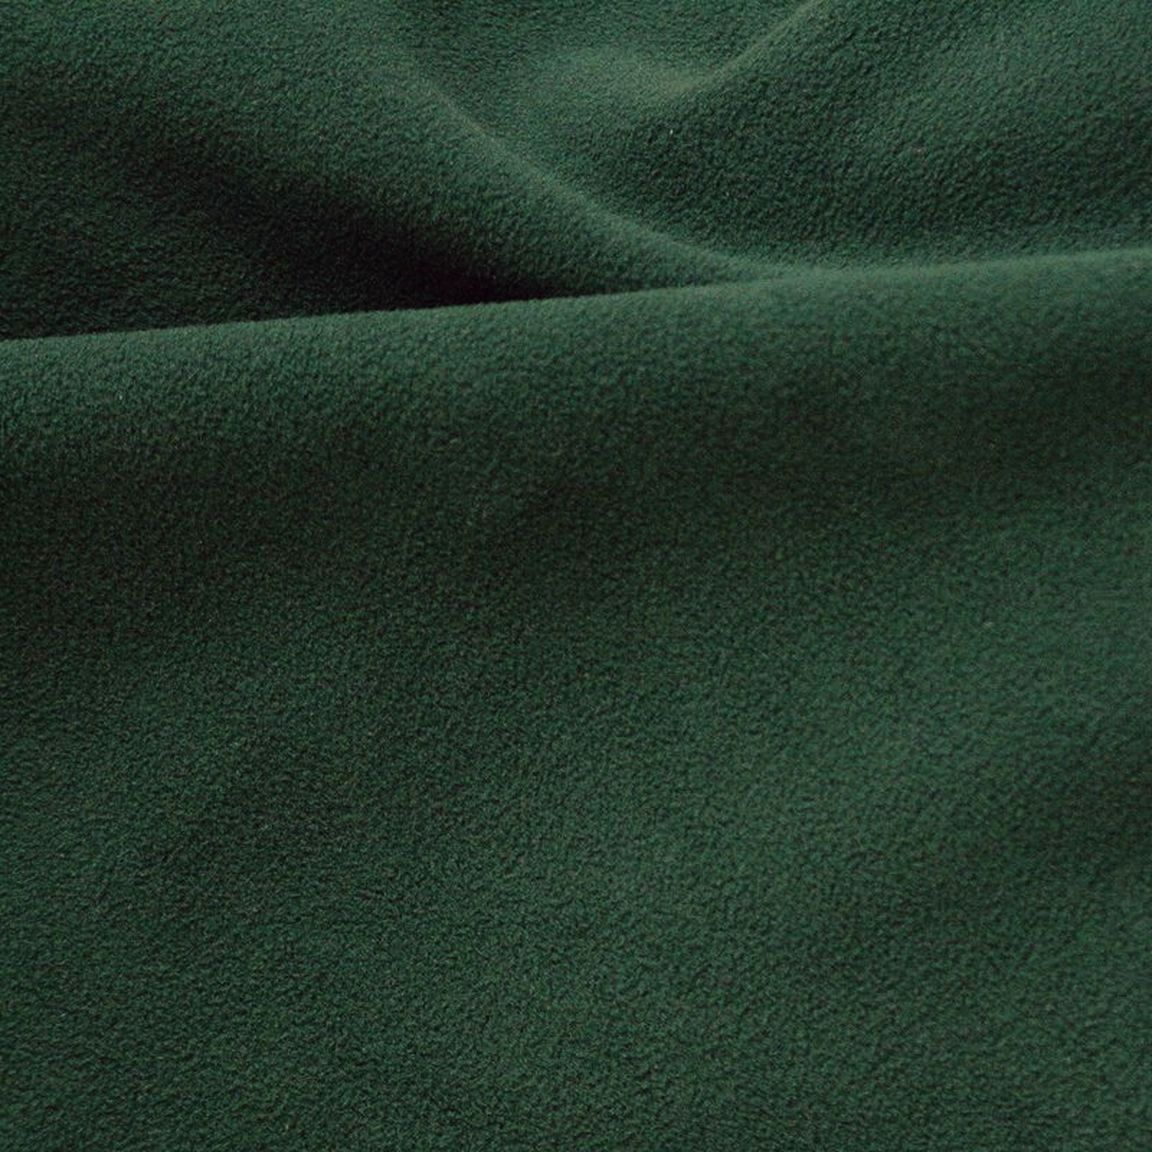 dunkel grün Polar-Fleece-Stoff 2mm dick weiche Meterware Schal Jacke Decke Mütze